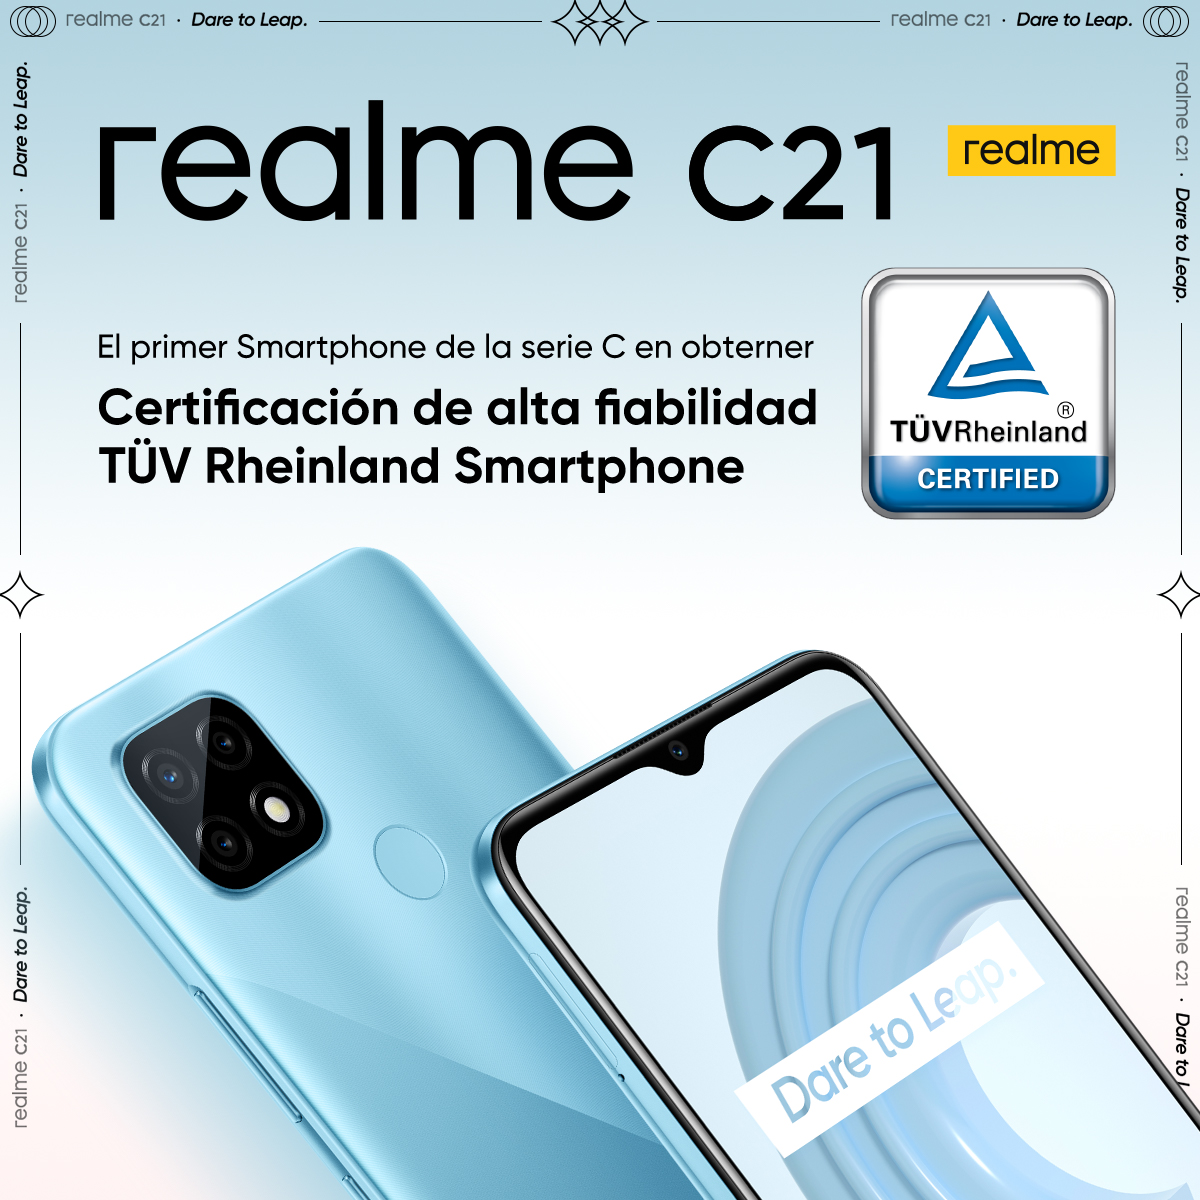 realme c21